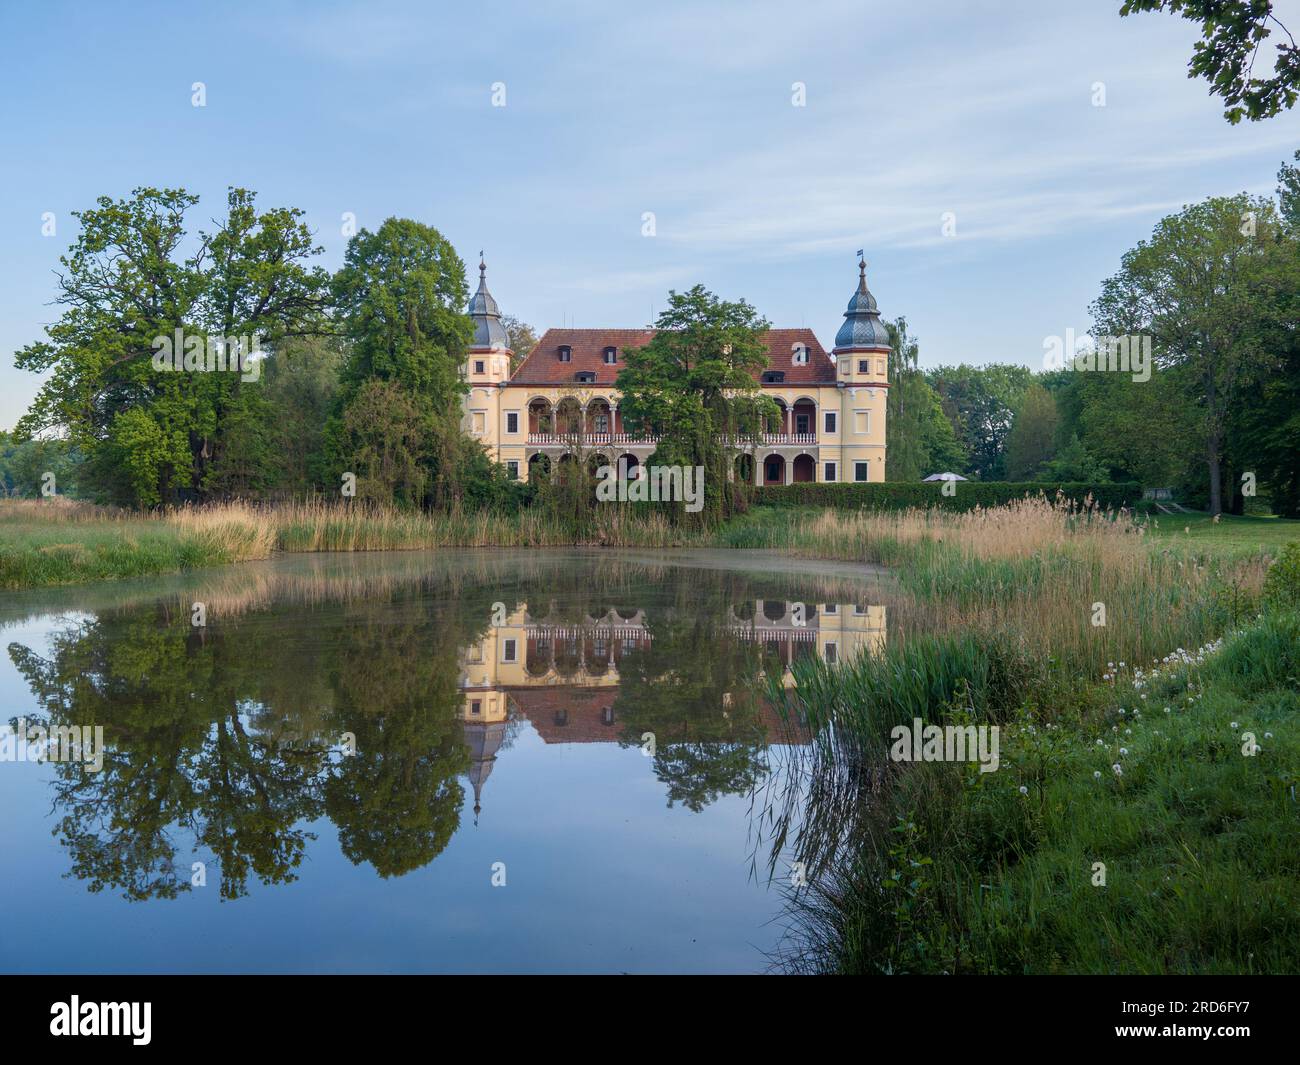 Palace in Krobielowice Lower Silesia Stock Photo